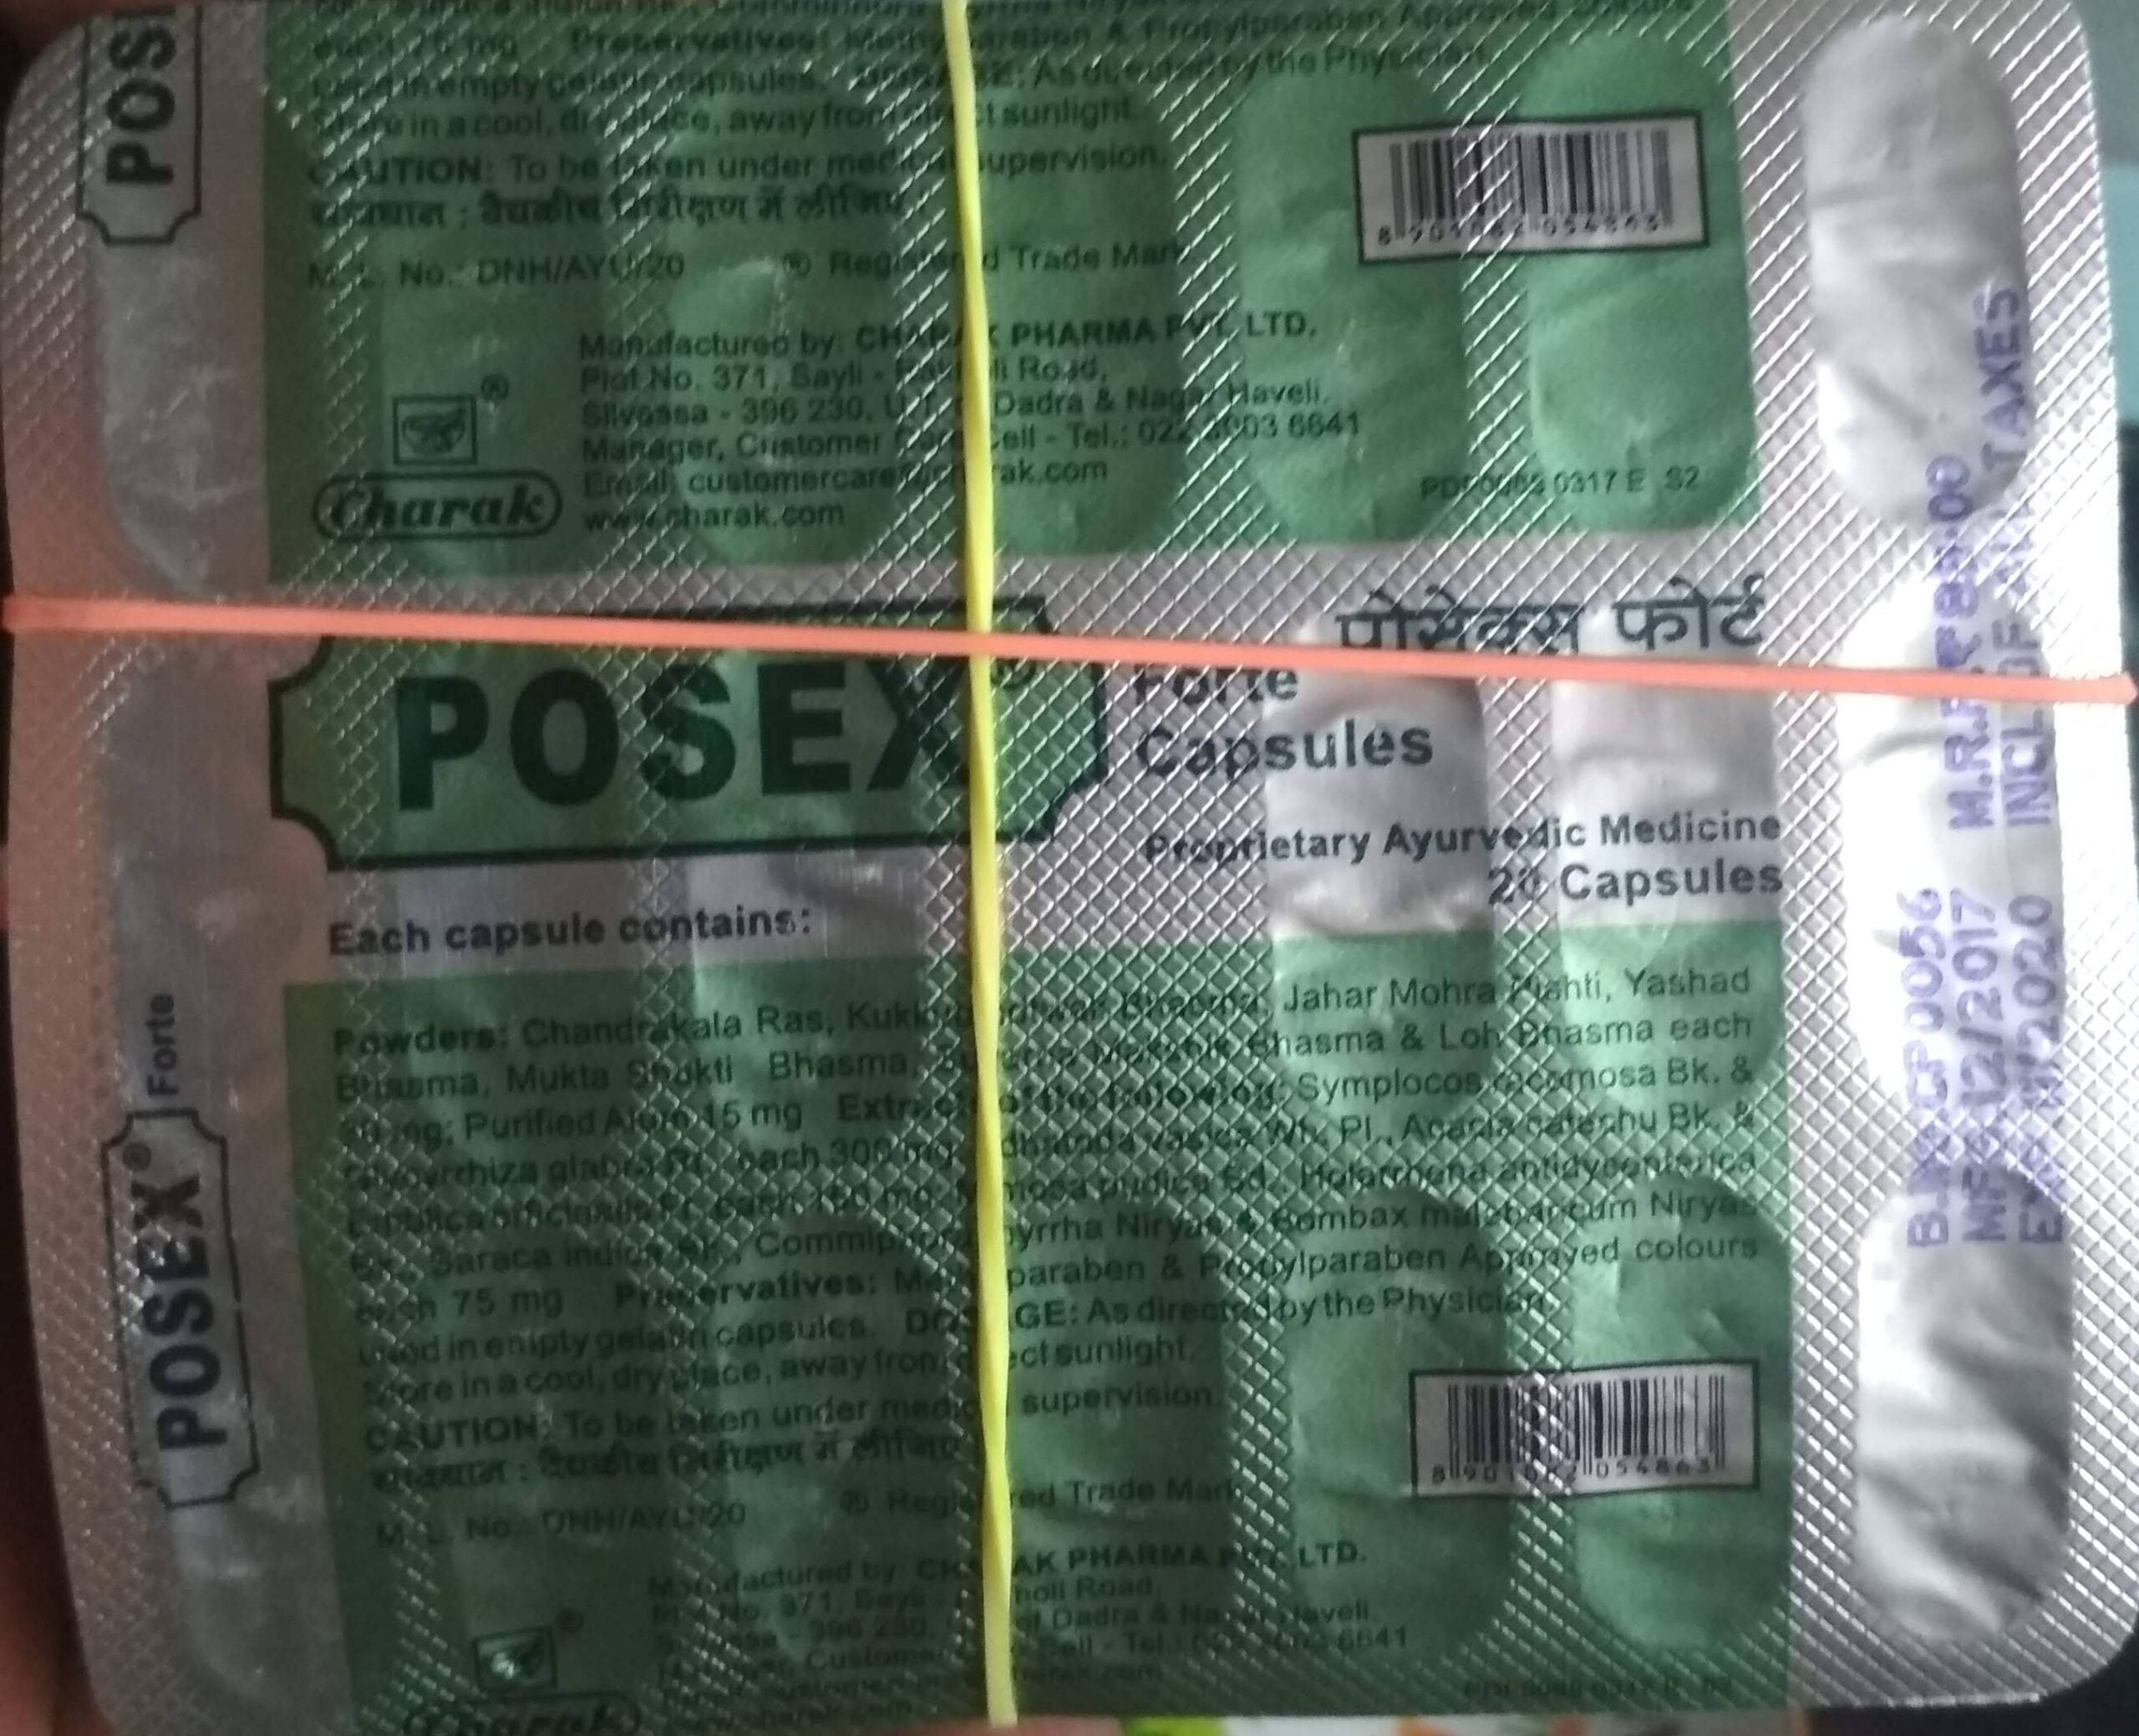 posex forte capsules 60cap upto 15% off charak phytocare